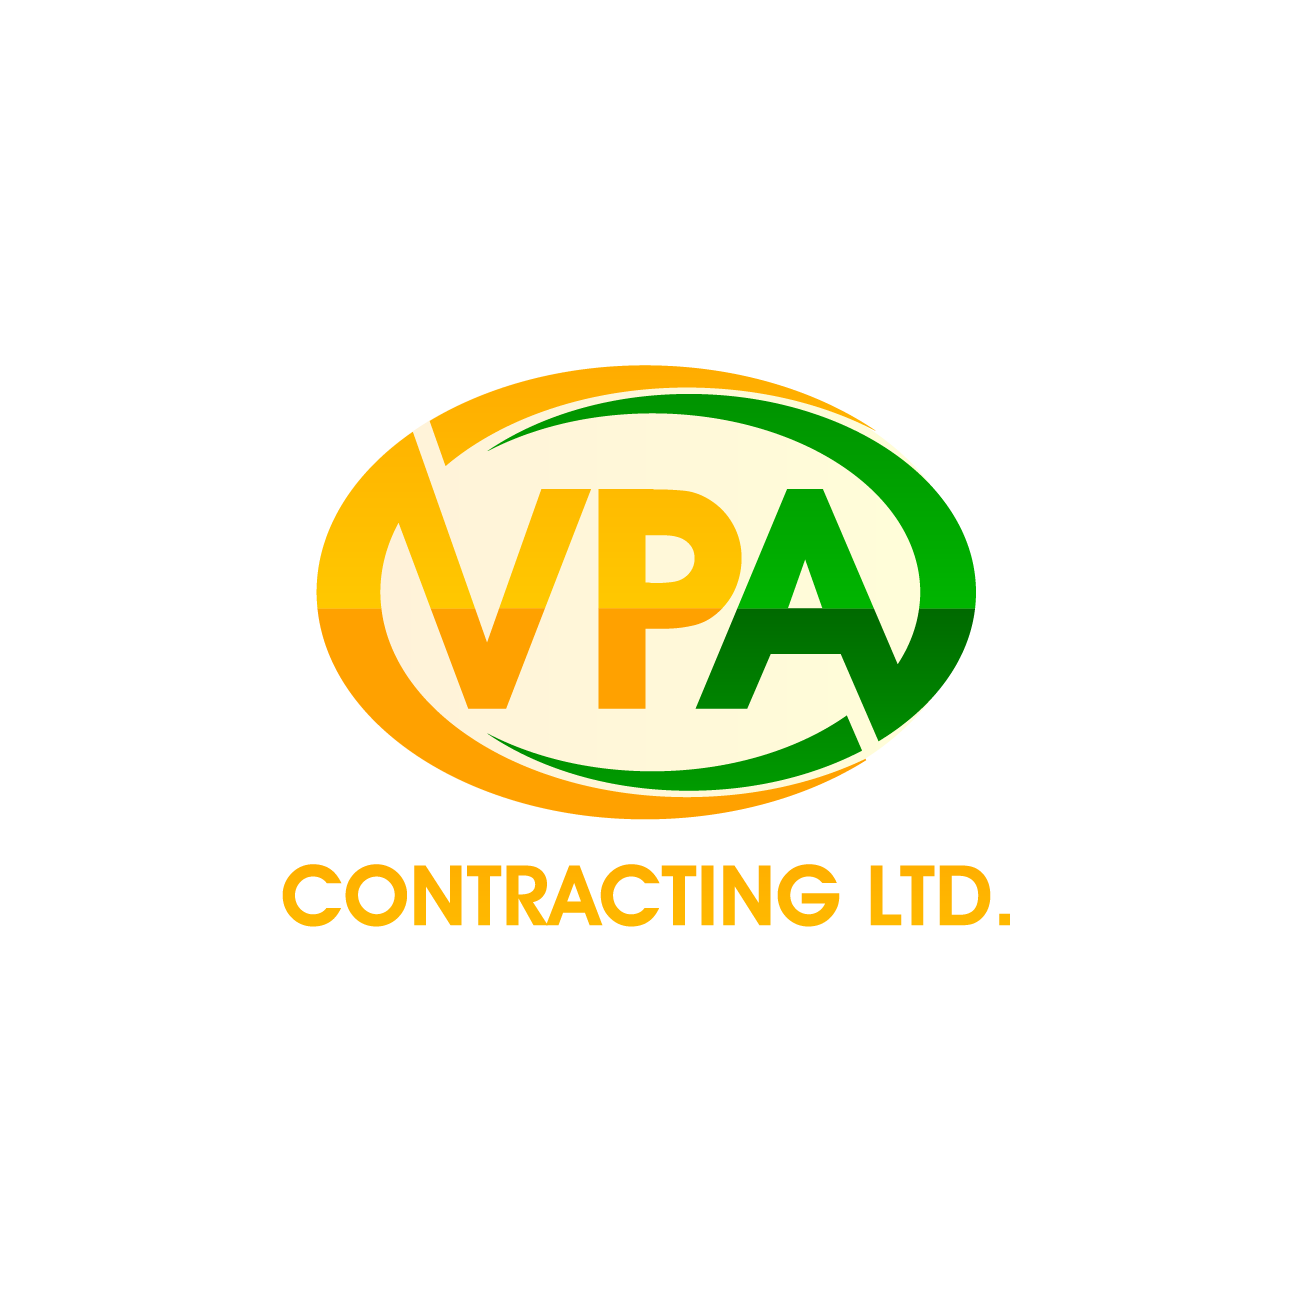 Vpa Contracting Ltd. -AA-Rev-03-Final-01